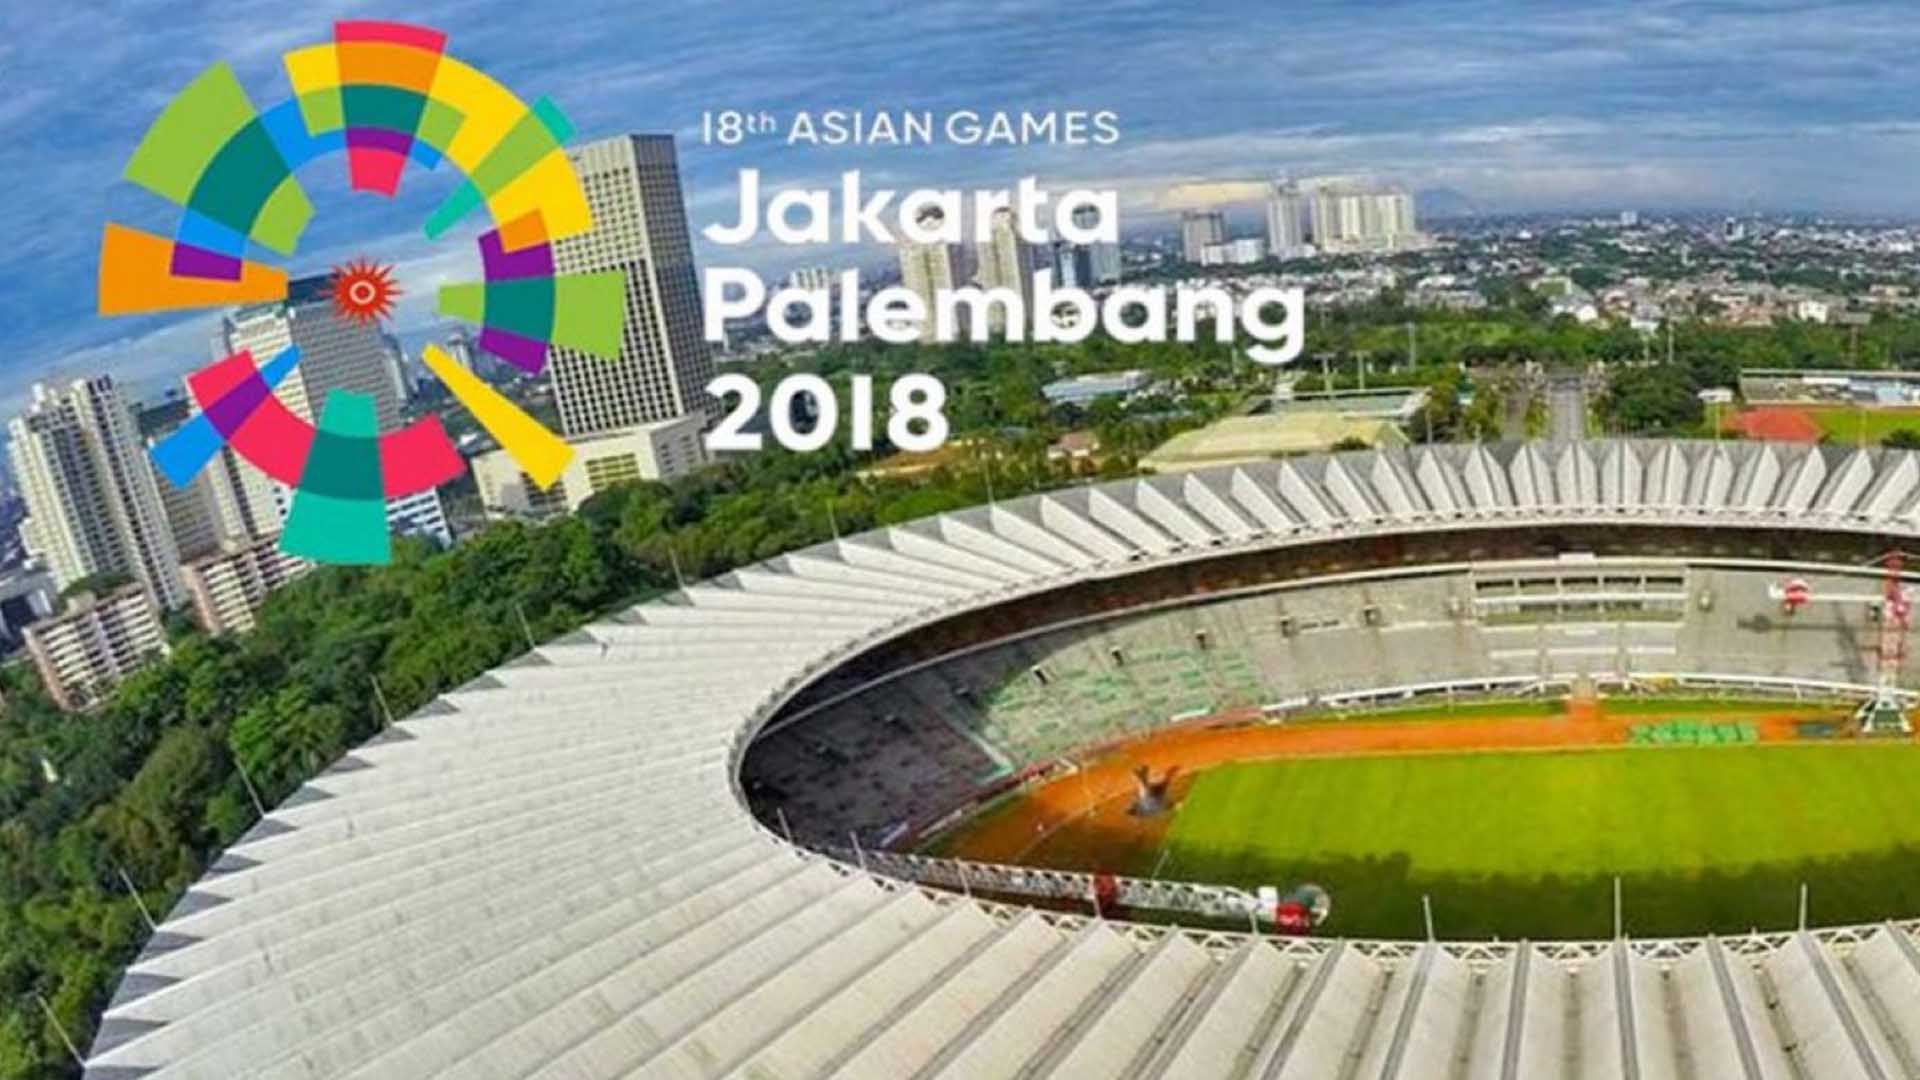 Akhirnya Jadwal Tanding eSports di Asian Games 2018 Sudah Fix!